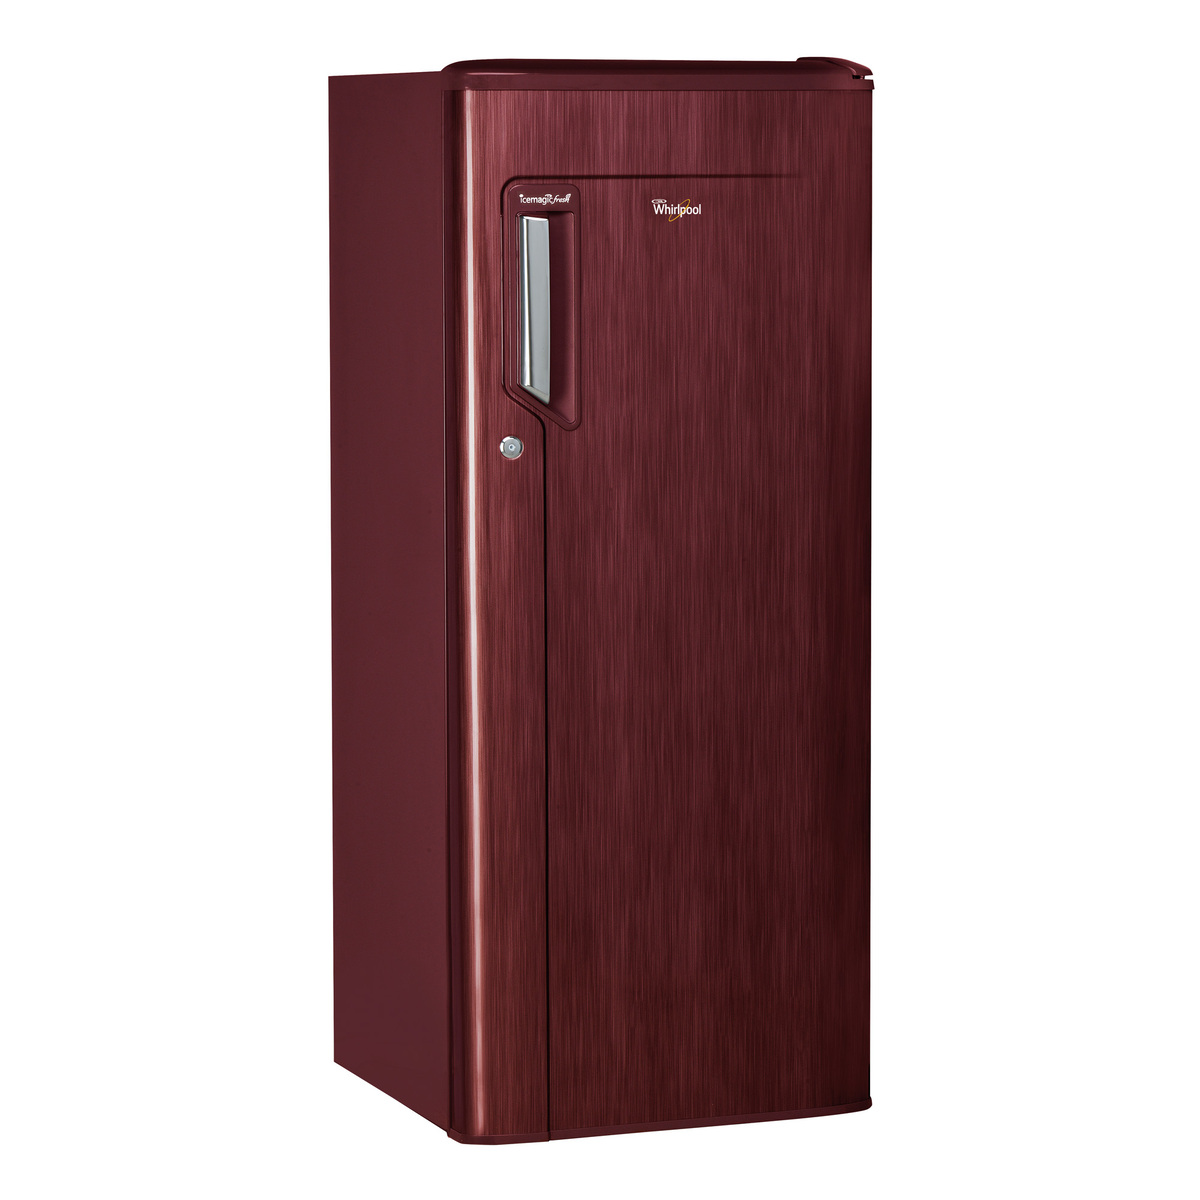 Whirlpool Single Door Refrigerator, 190 L, Raspberry Red, WMD205WN